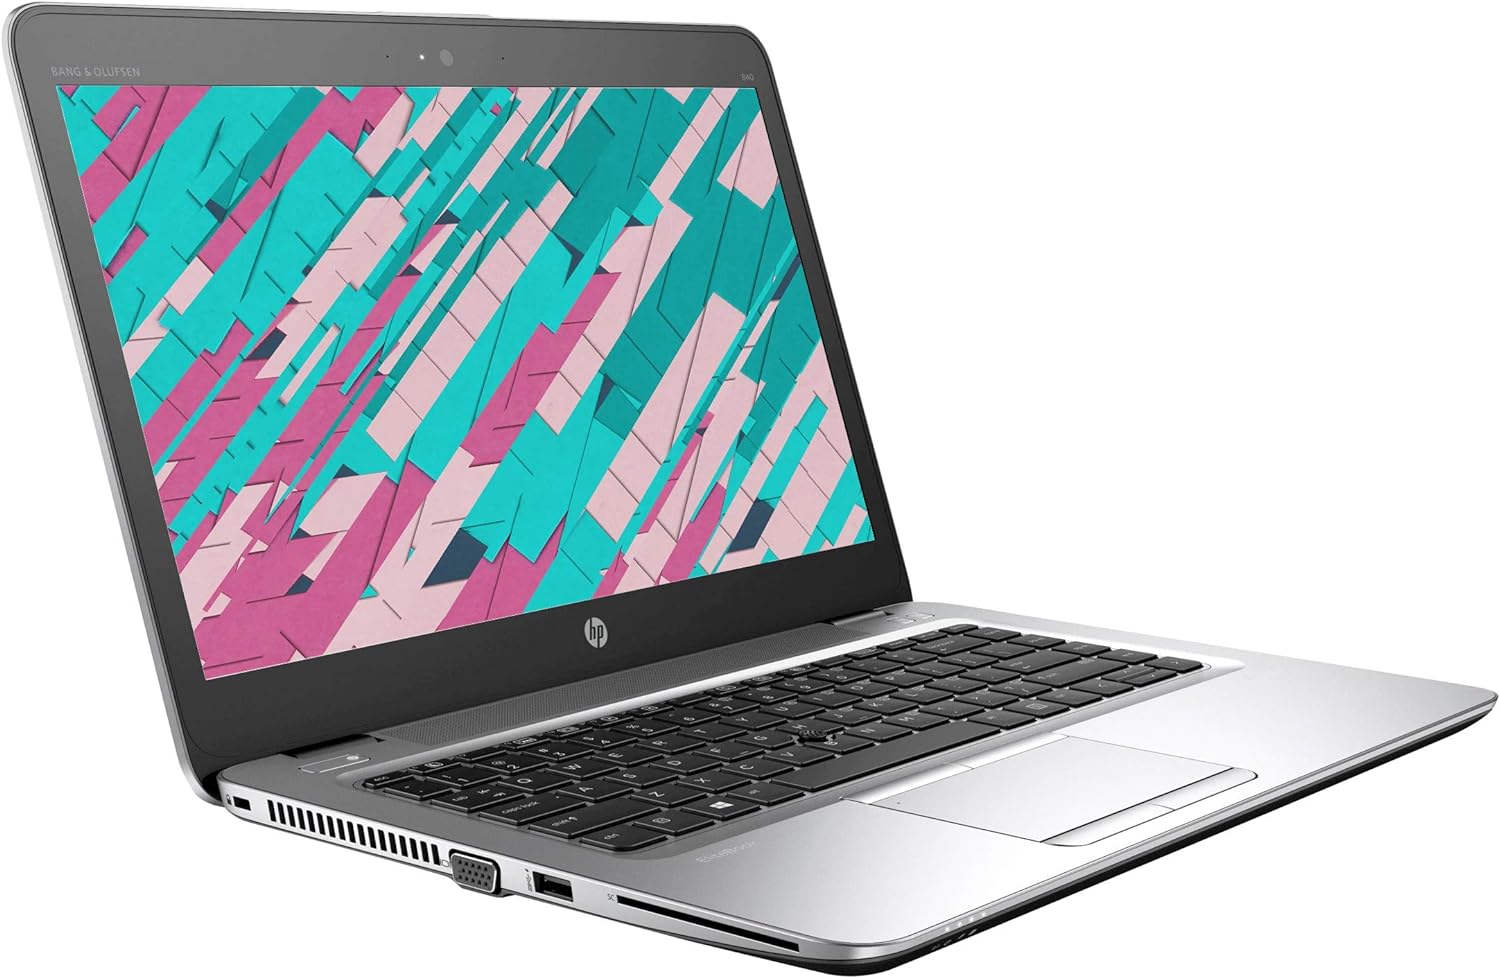 HP EliteBook 840 G4 14 Laptop, Intel i5 8200U 2.6GHz, 8GB DDR4 RAM, 256GB NVMe M.2 SSD, USB Type C, Webcam, Windows 10 (Renewed)